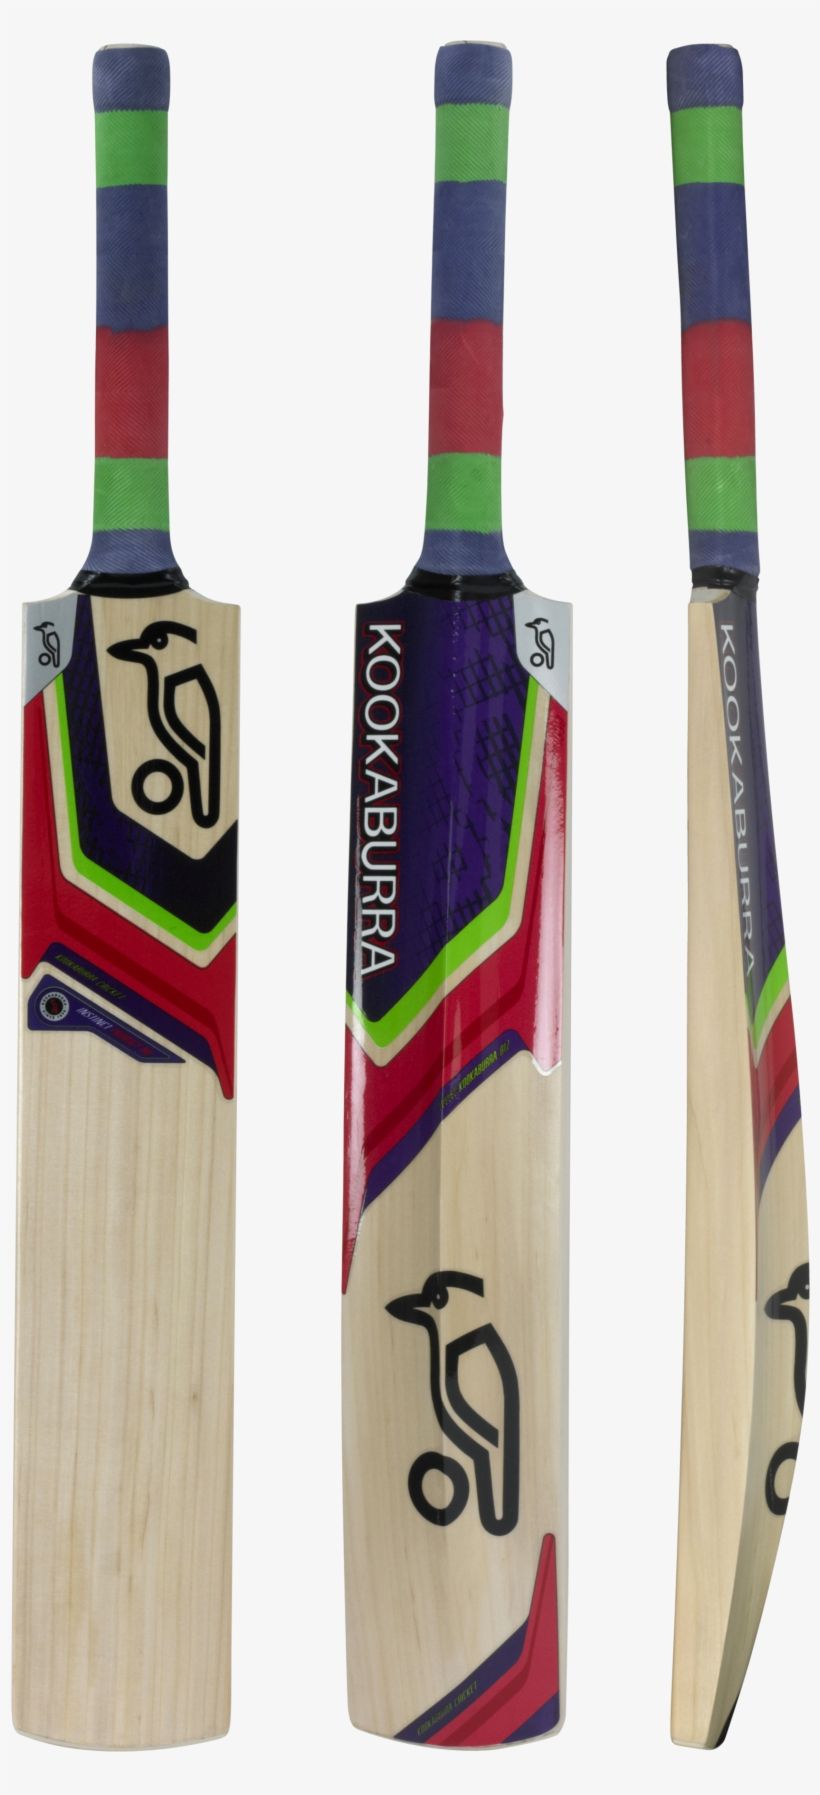 Cricket Bats And Balls Wallpaper Cricket Bats 2015 PNG Image. Transparent PNG Free Download on SeekPNG